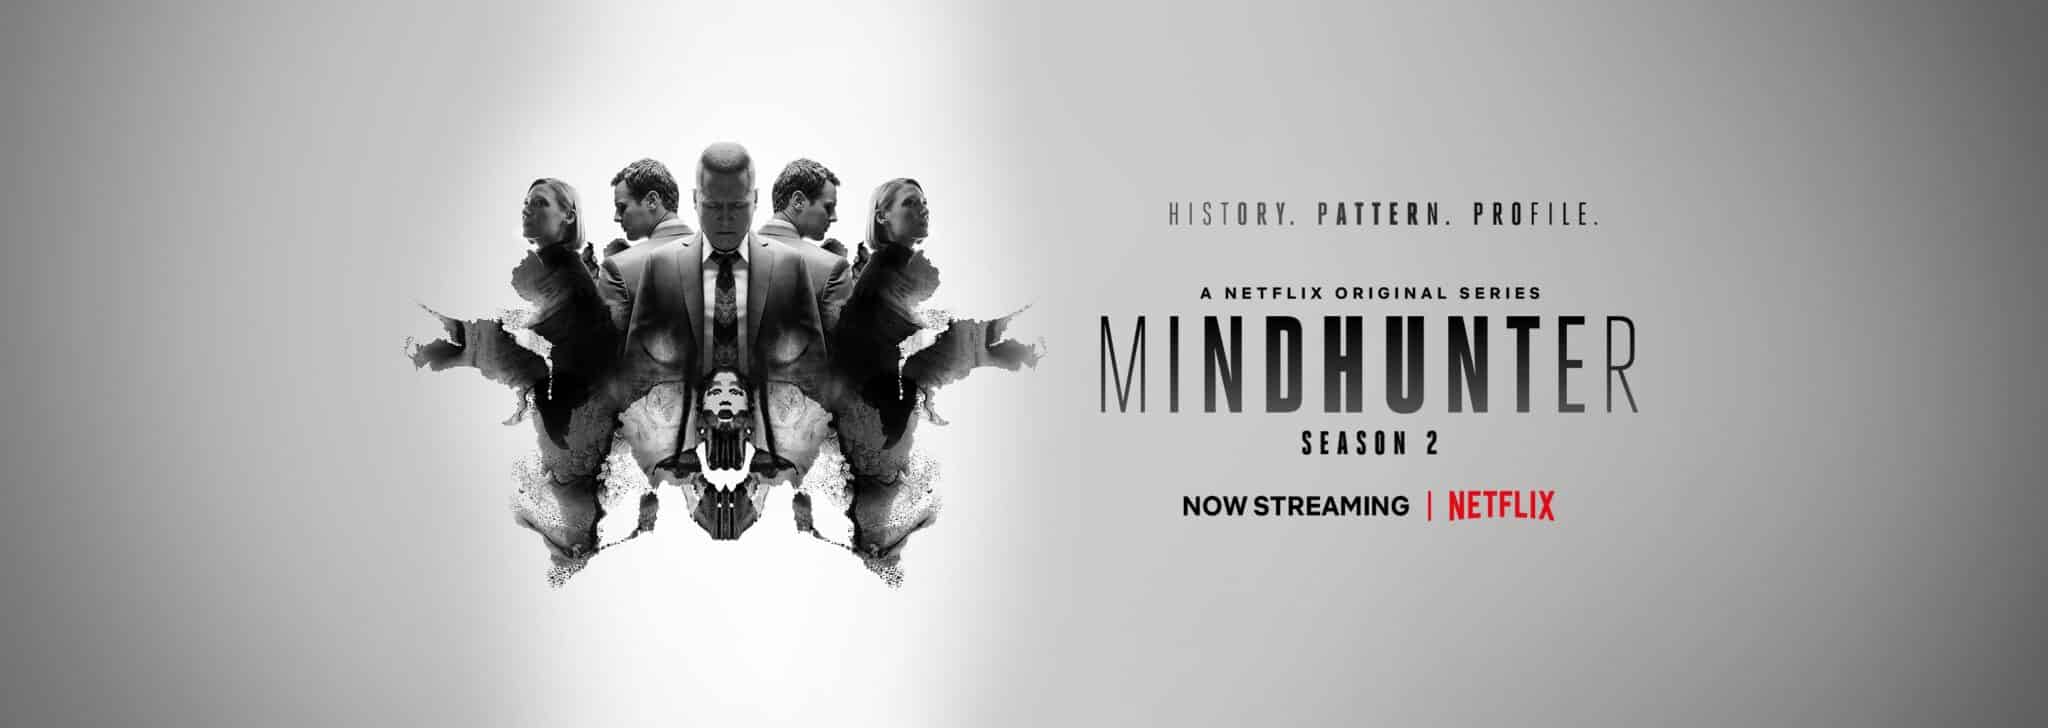 Netflix binge watching show Mind hunter